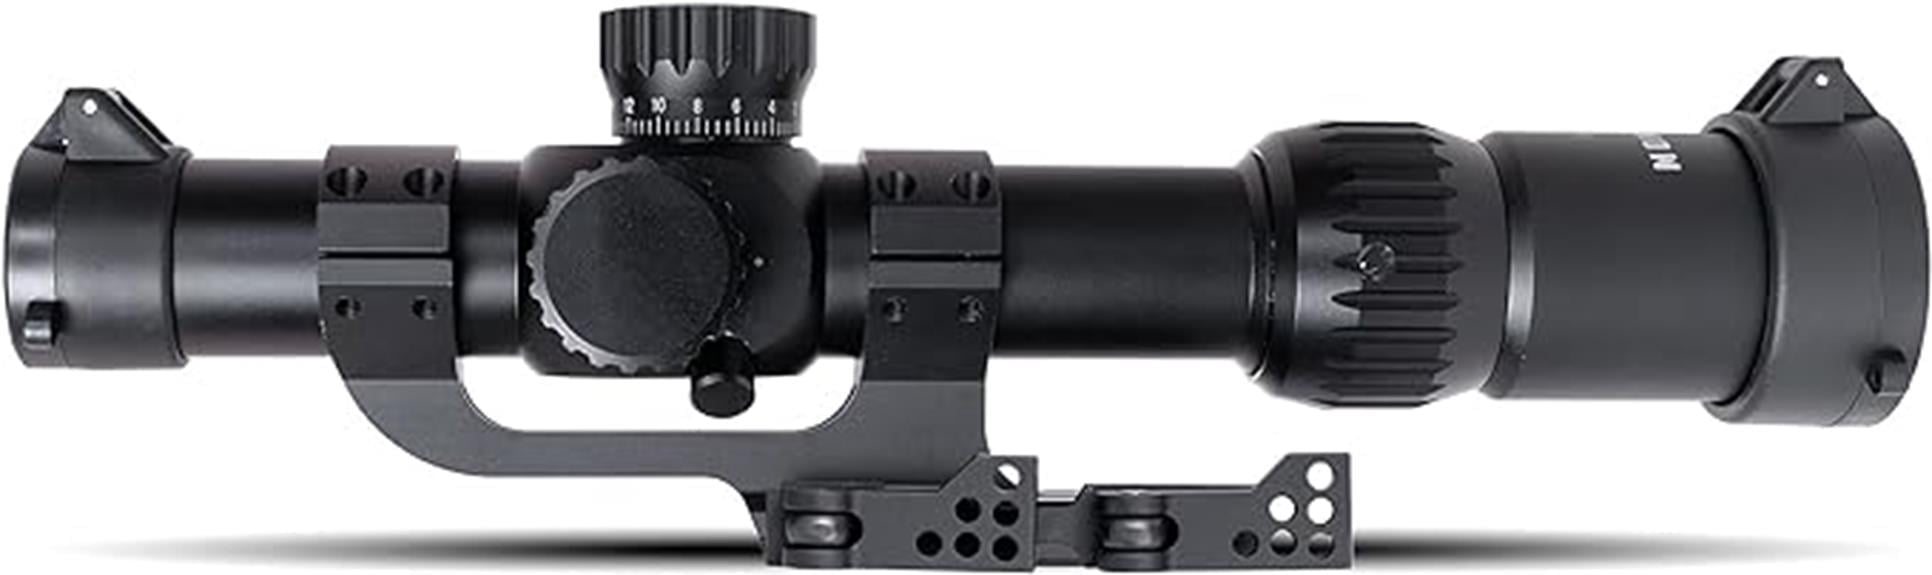 monstrum ffp rifle scope